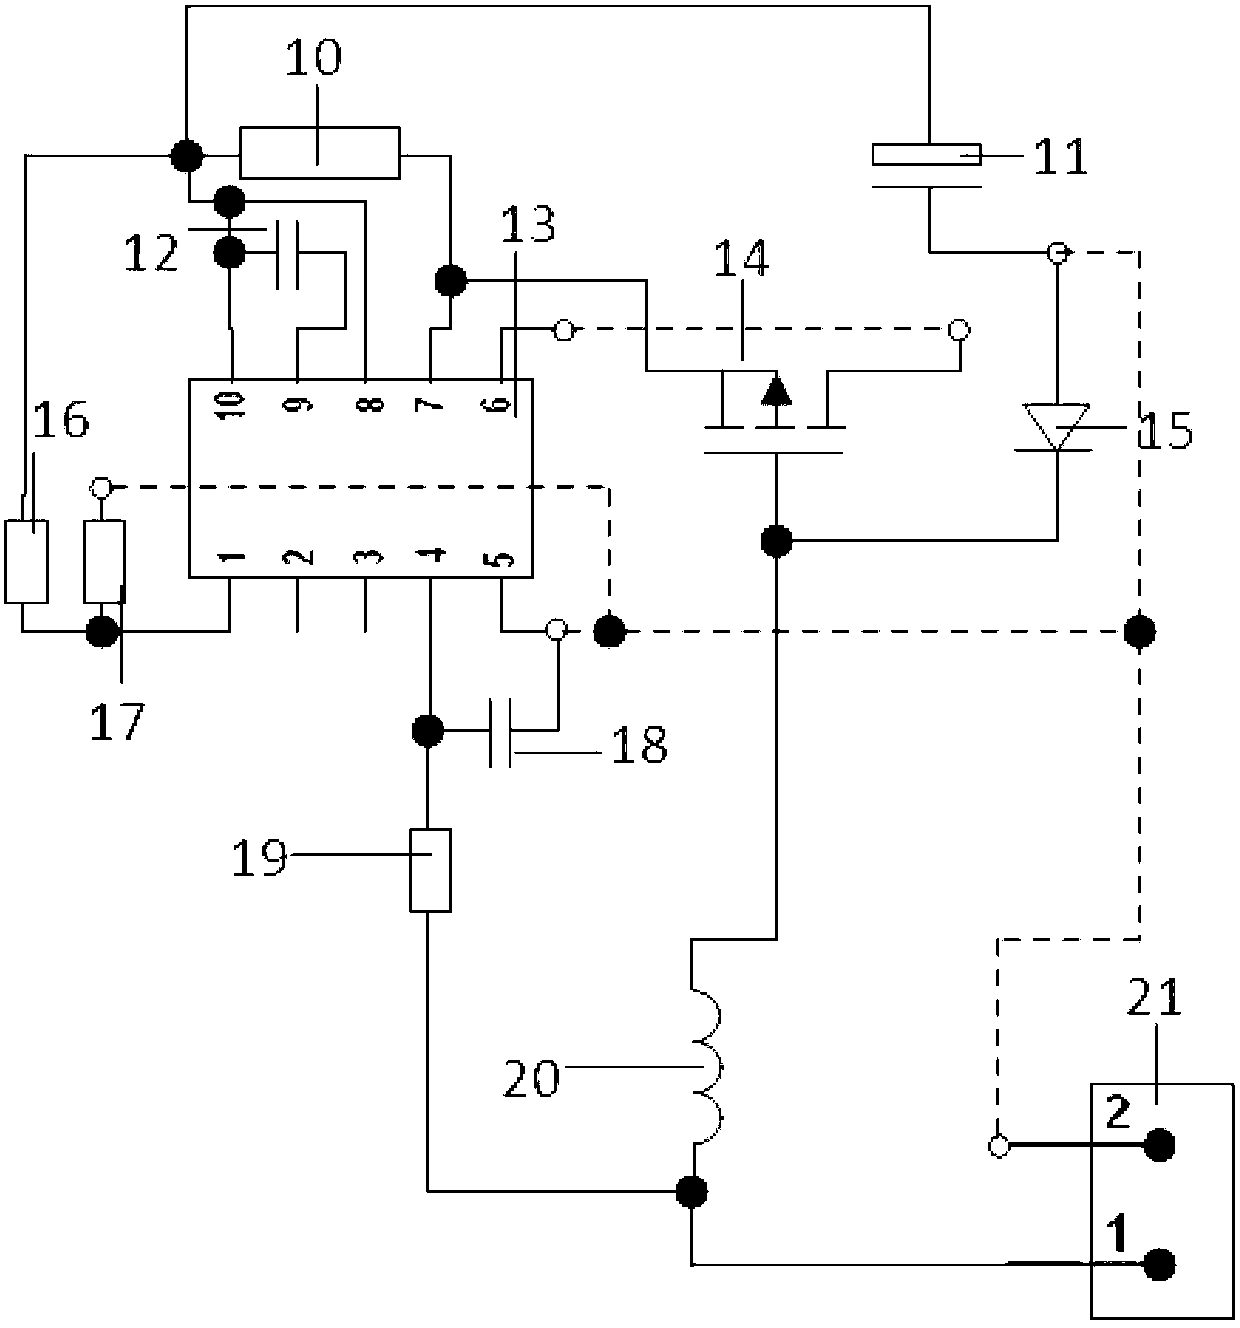 LED (light-emitting diode) driving circuit PCB (printed circuit board)